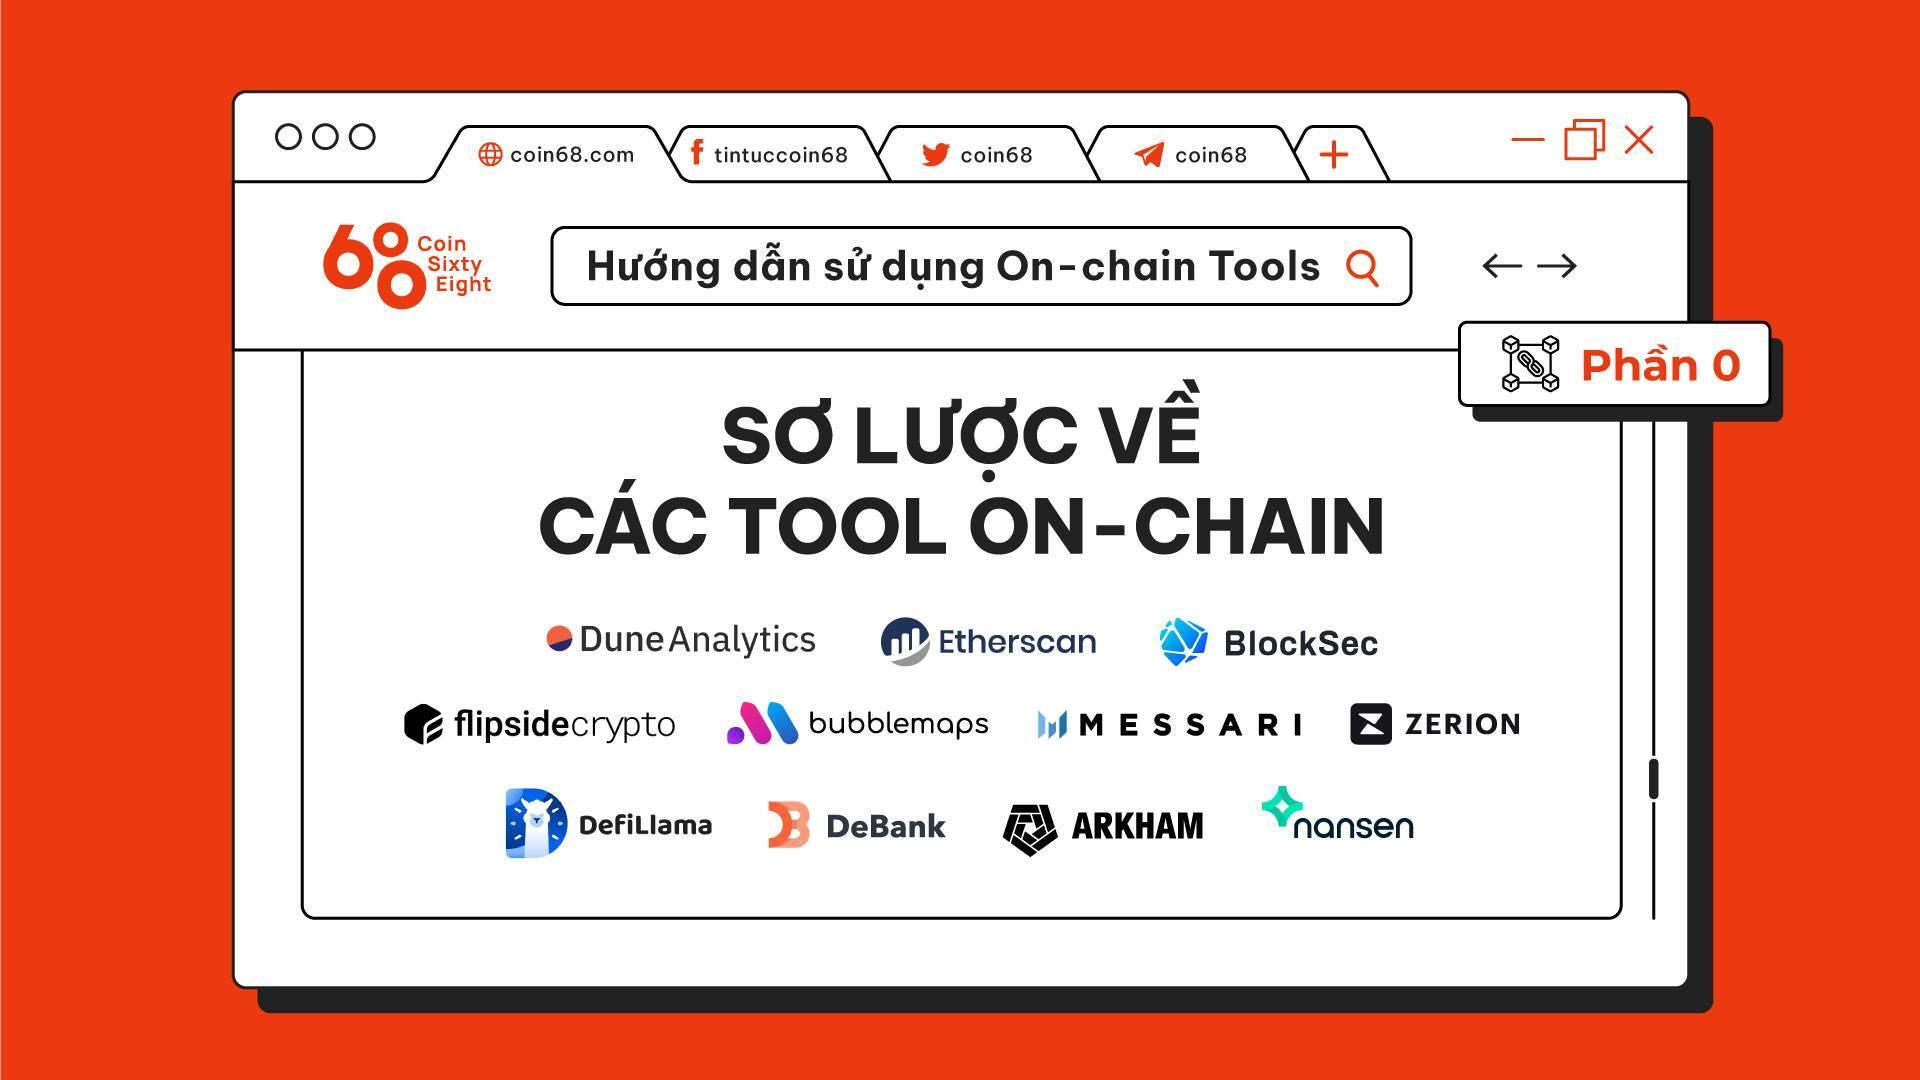 huong-dan-su-dung-on-chain-tools-phan-0-so-luoc-ve-cac-cong-cu-phan-tich-du-lieu-on-chain